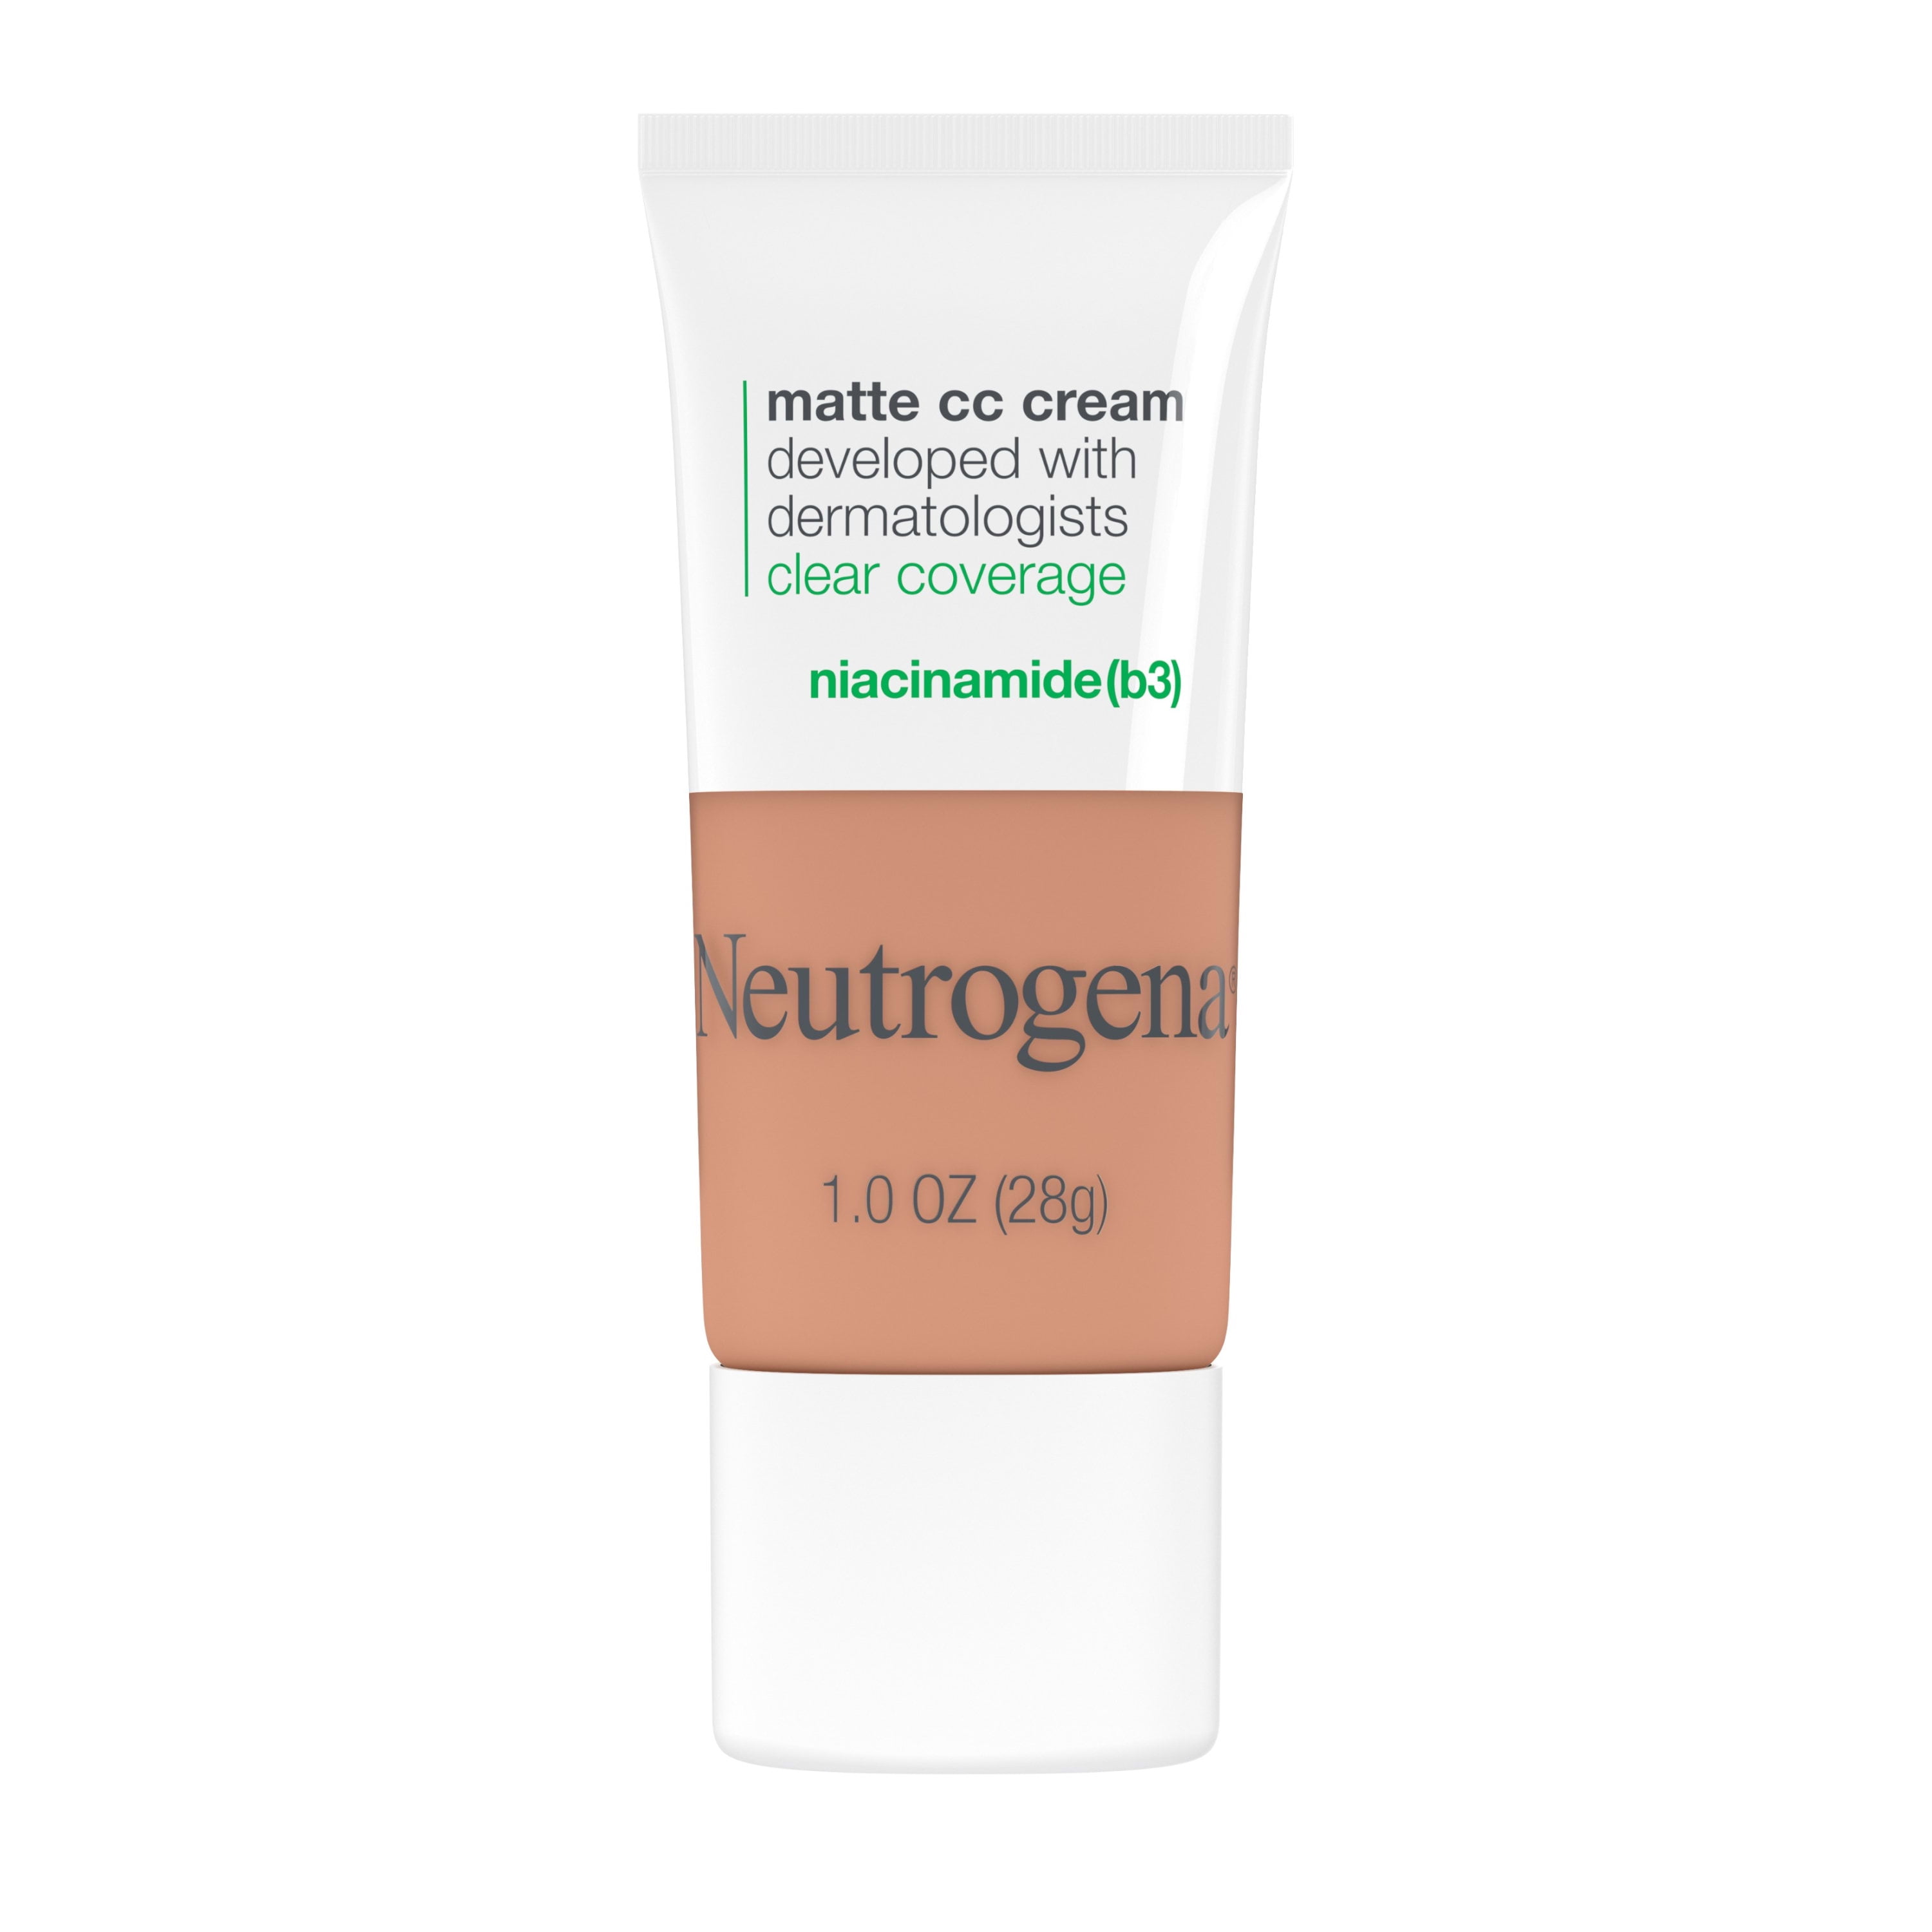 Neutrogena Clear Coverage Flawless Matte CC Cream, Fawn, 1 oz